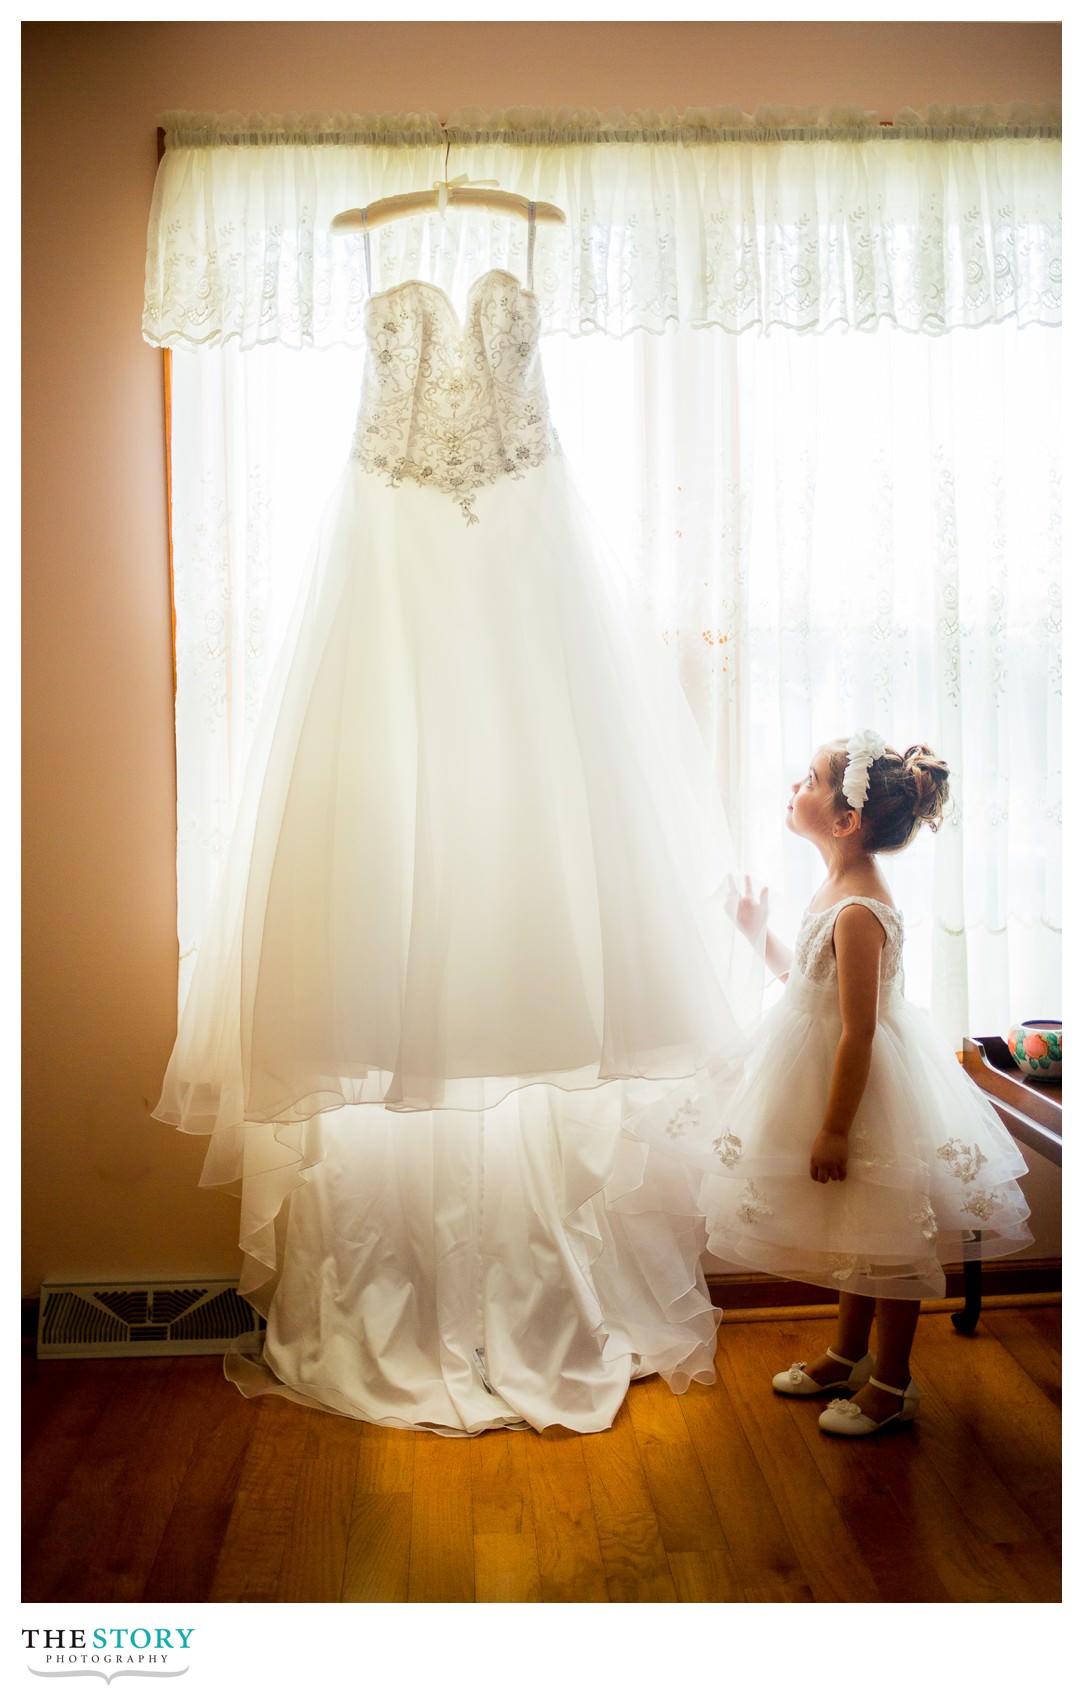 flower girl admiring the bride's dress on the wedding day